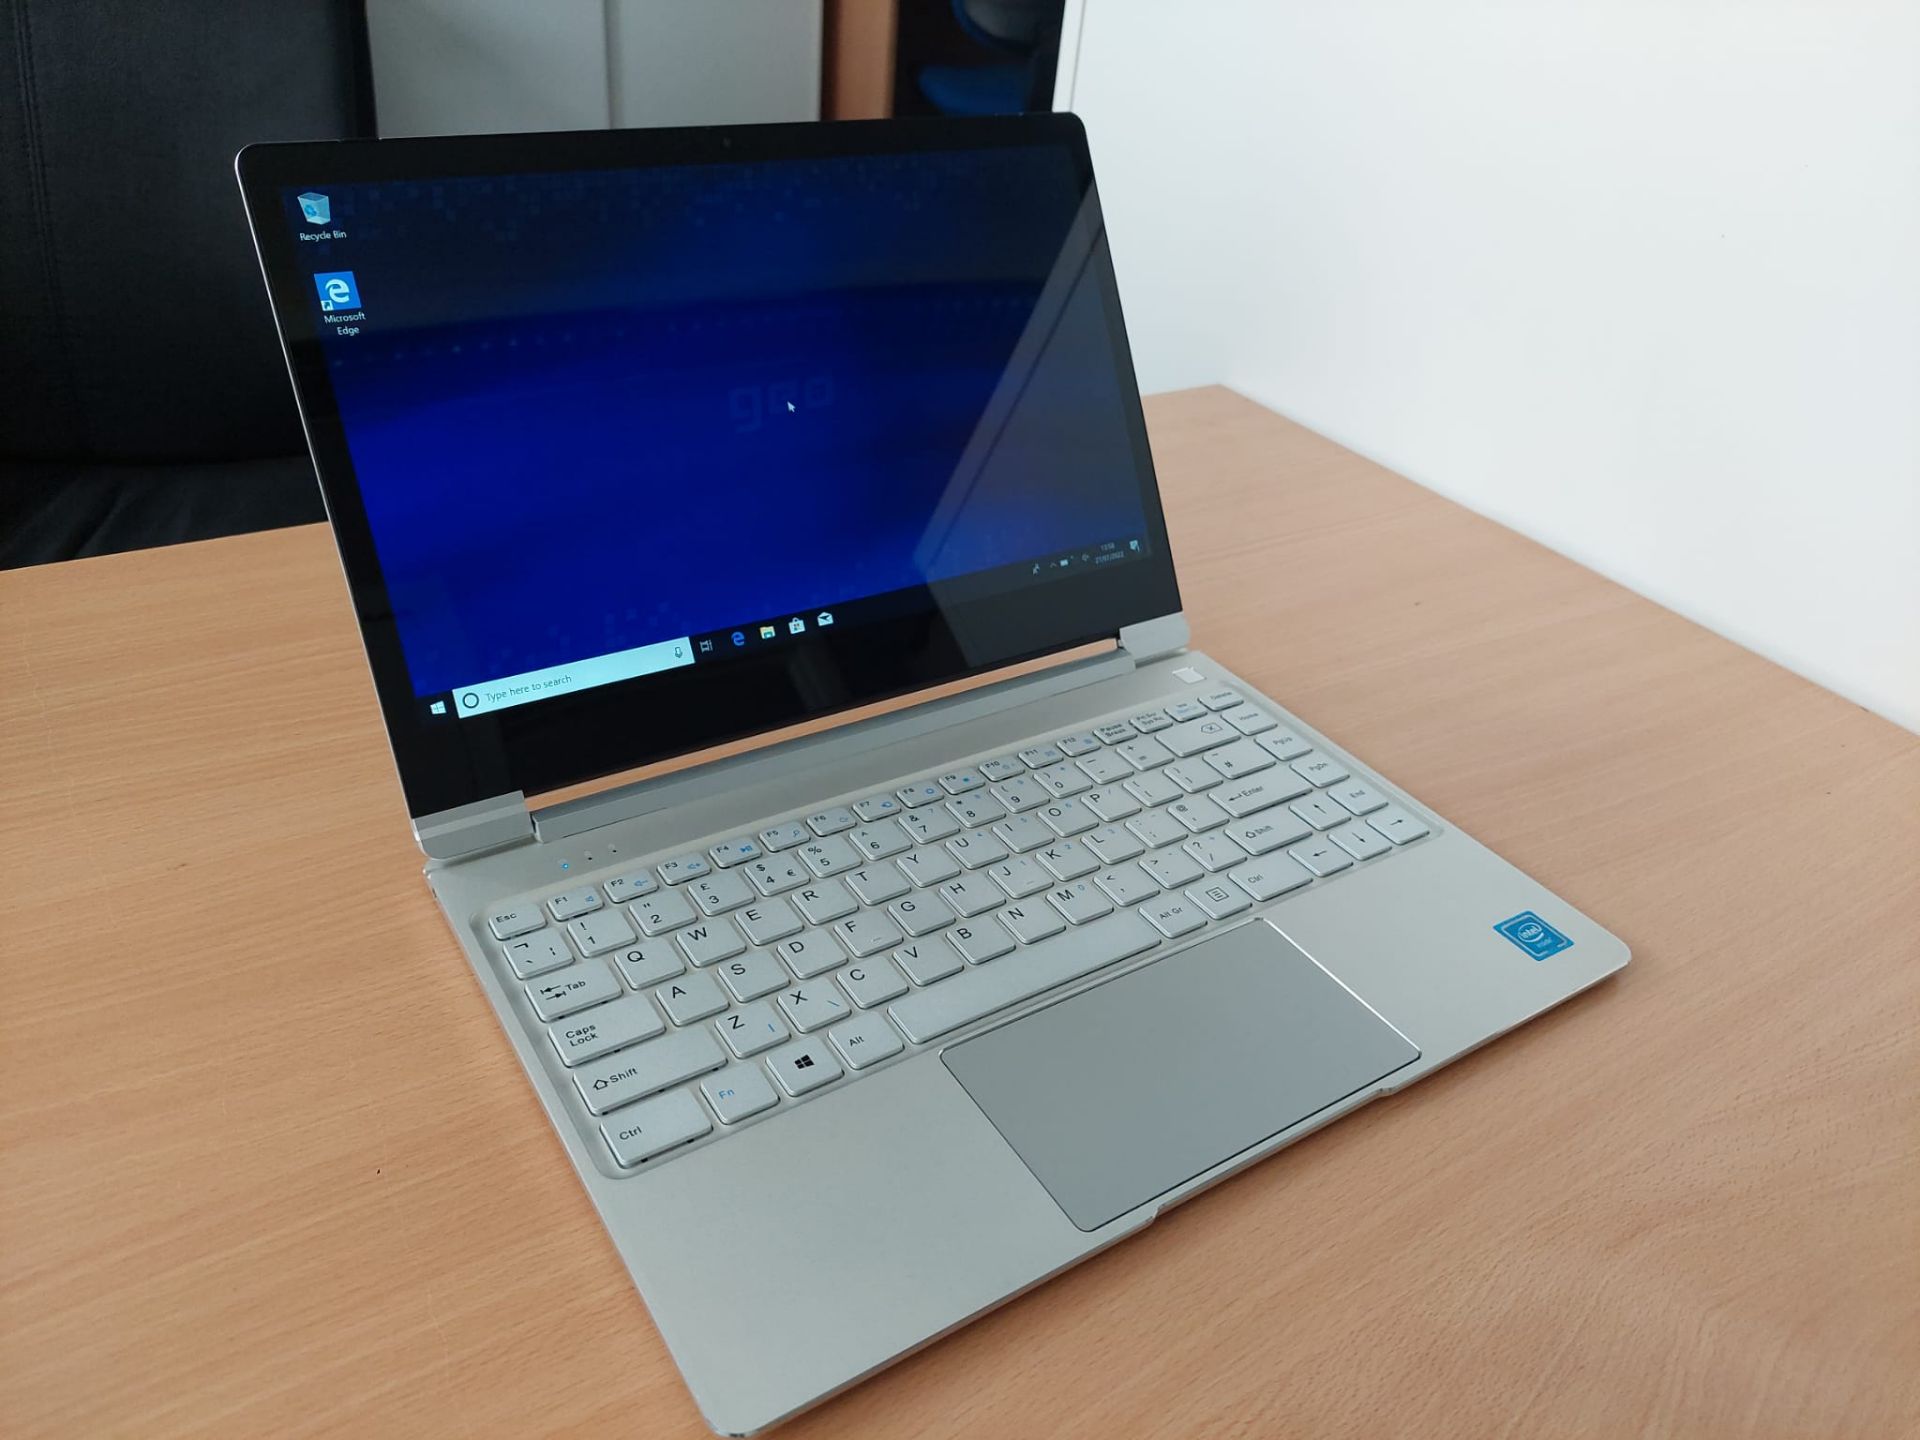 Geobook3X Silver Laptop w/ Intel Pentium N4200 CPU *NO VAT*